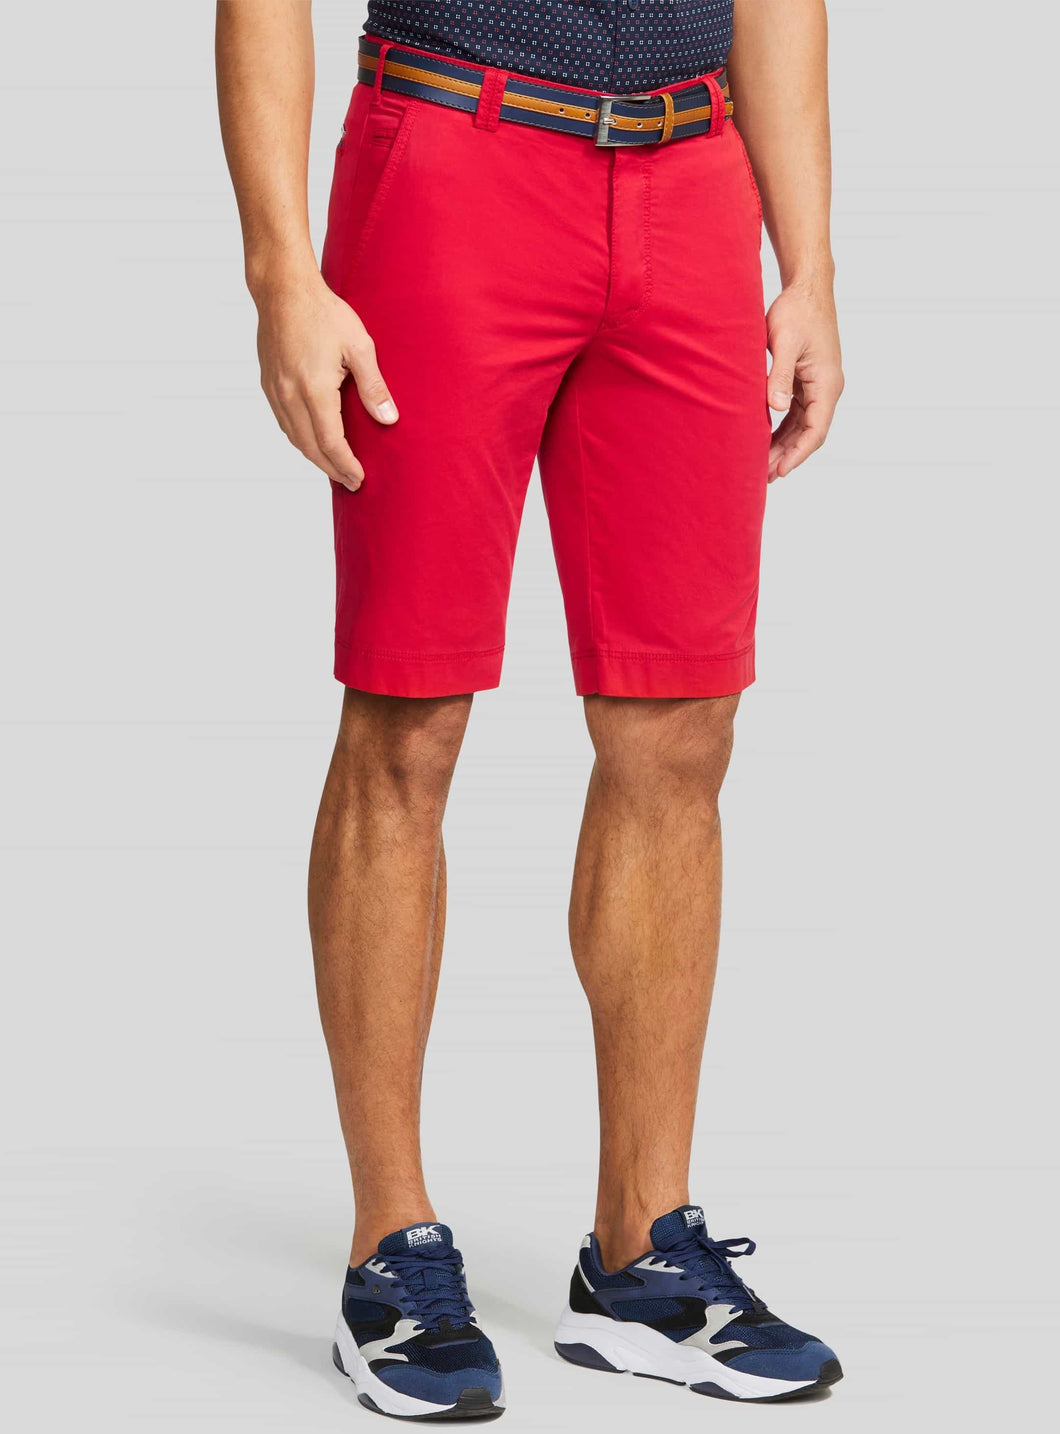 MEYER B-Palma Shorts - Men's Cotton Twill - Red